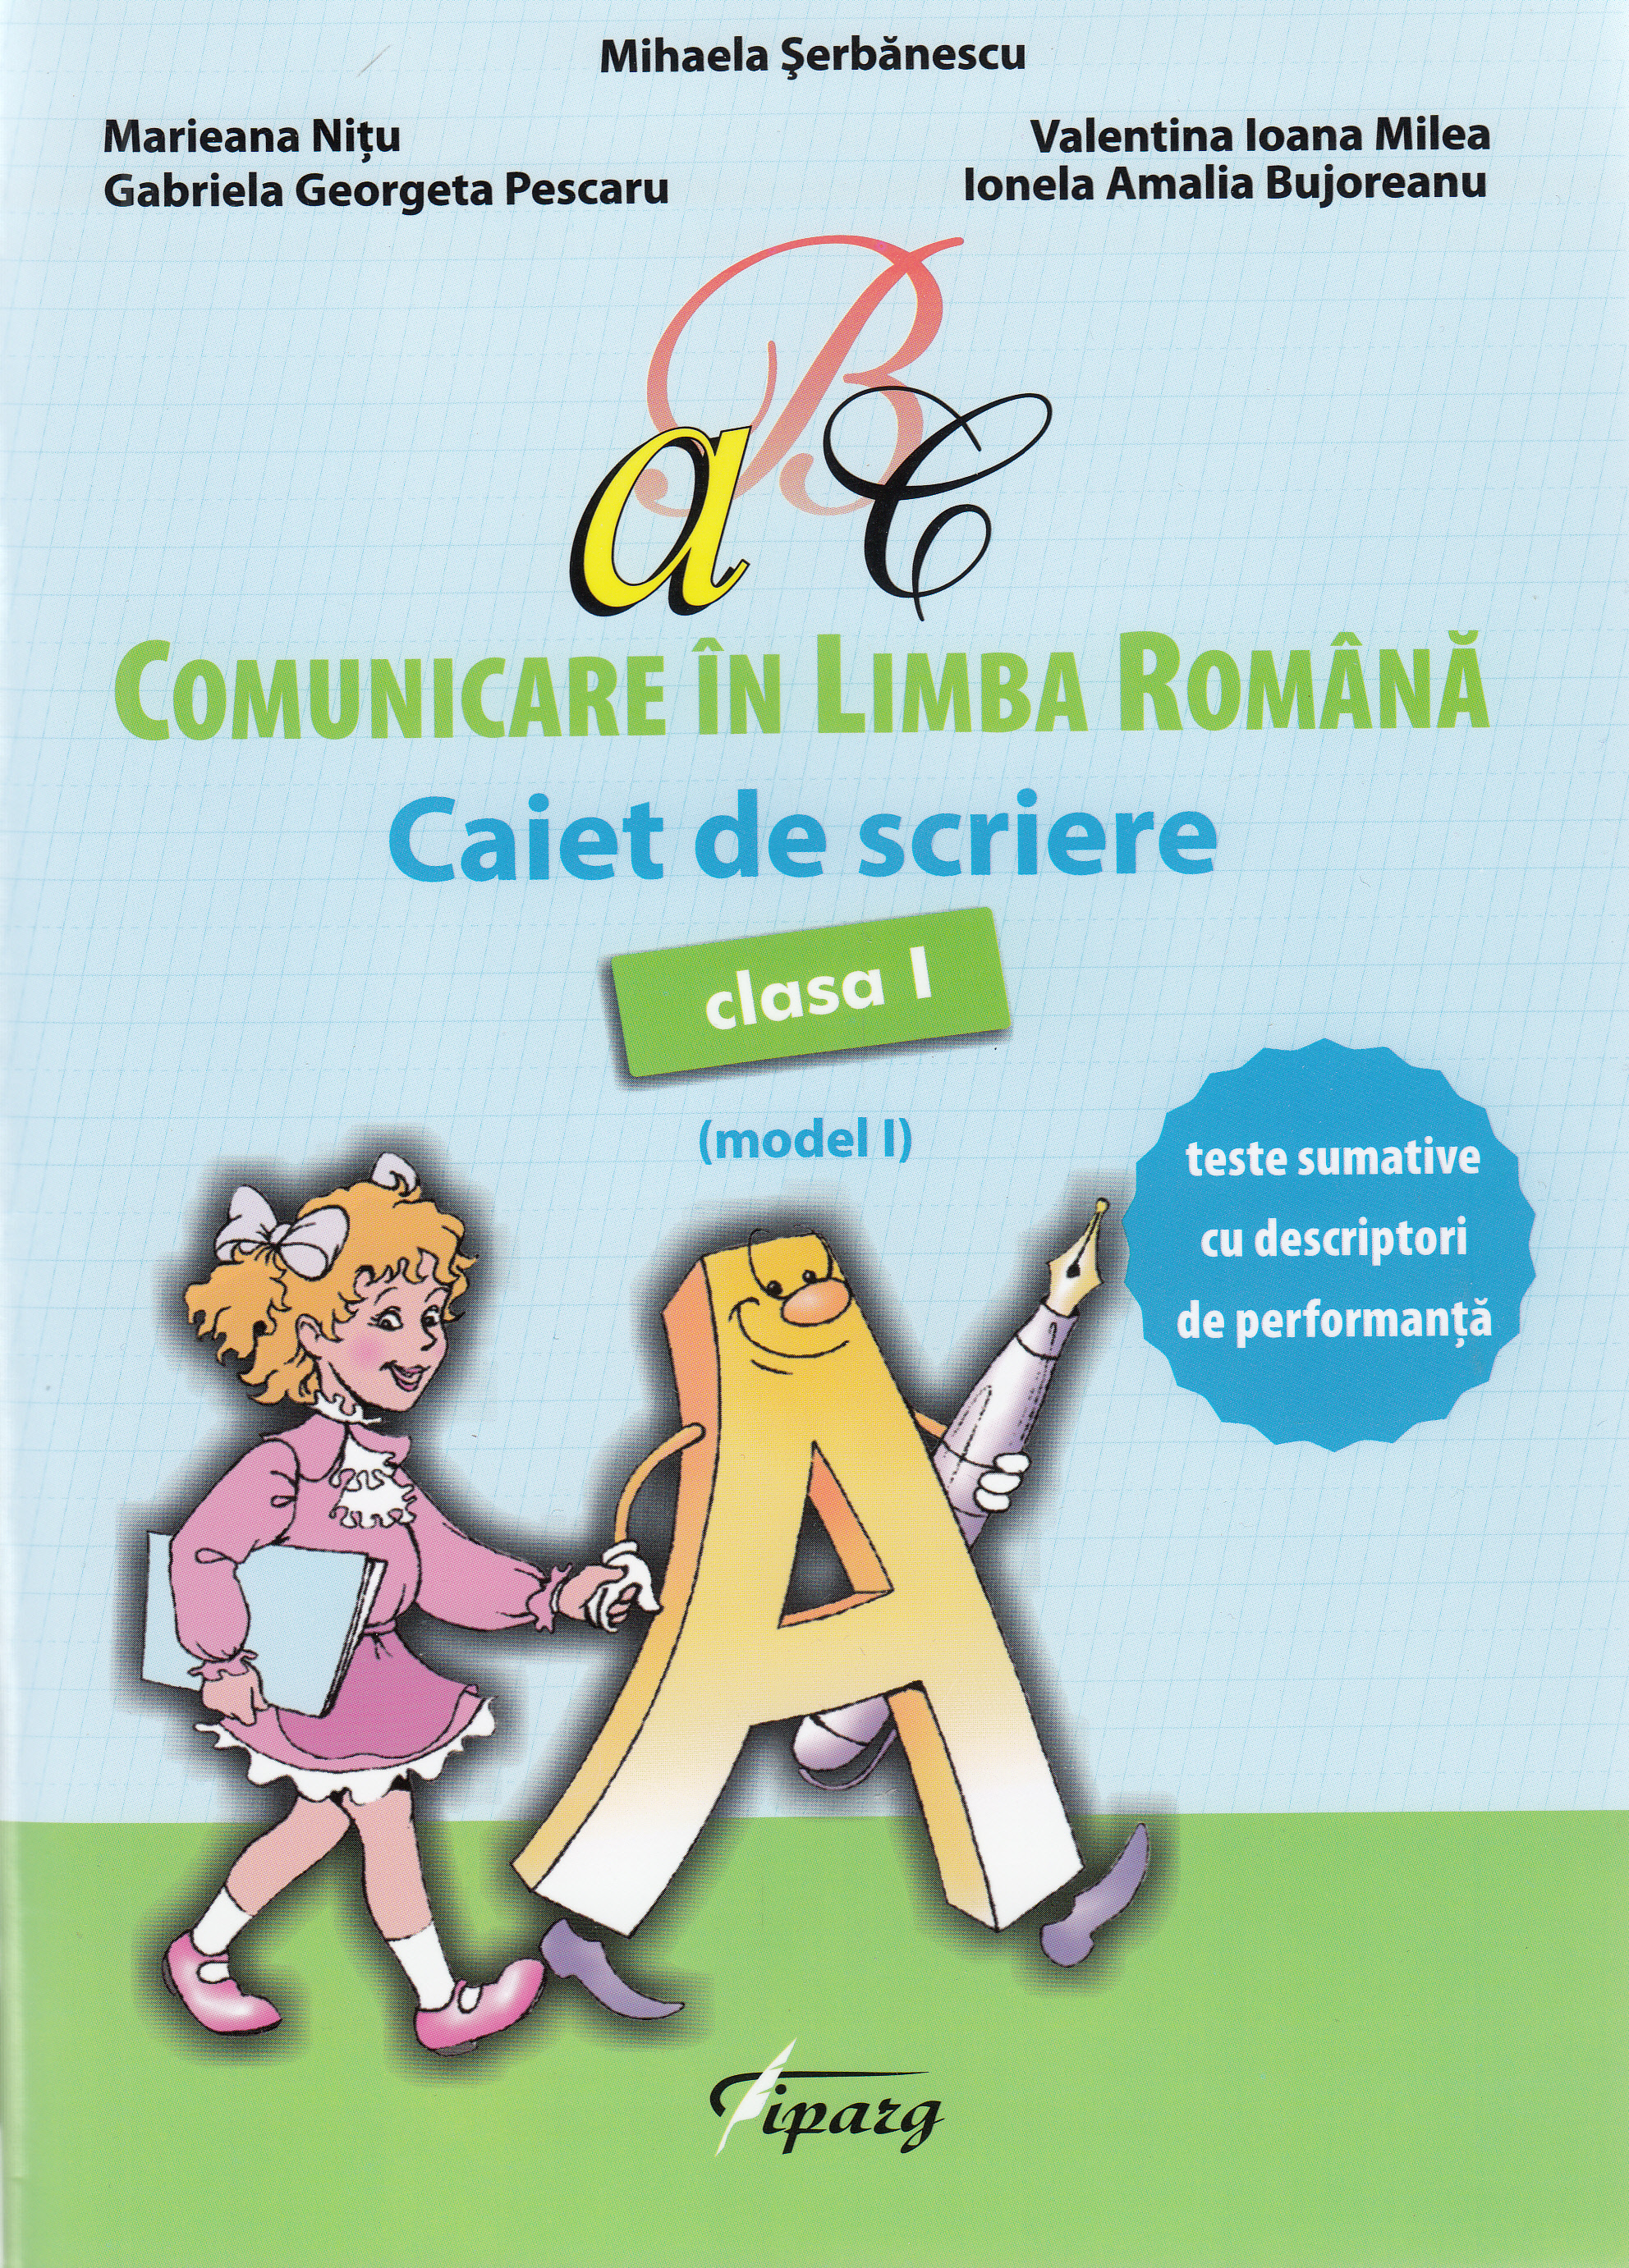 Comunicare in limba romana - Clasa 1 - Caiet de scriere (model I) - Mihaela Serbanescu